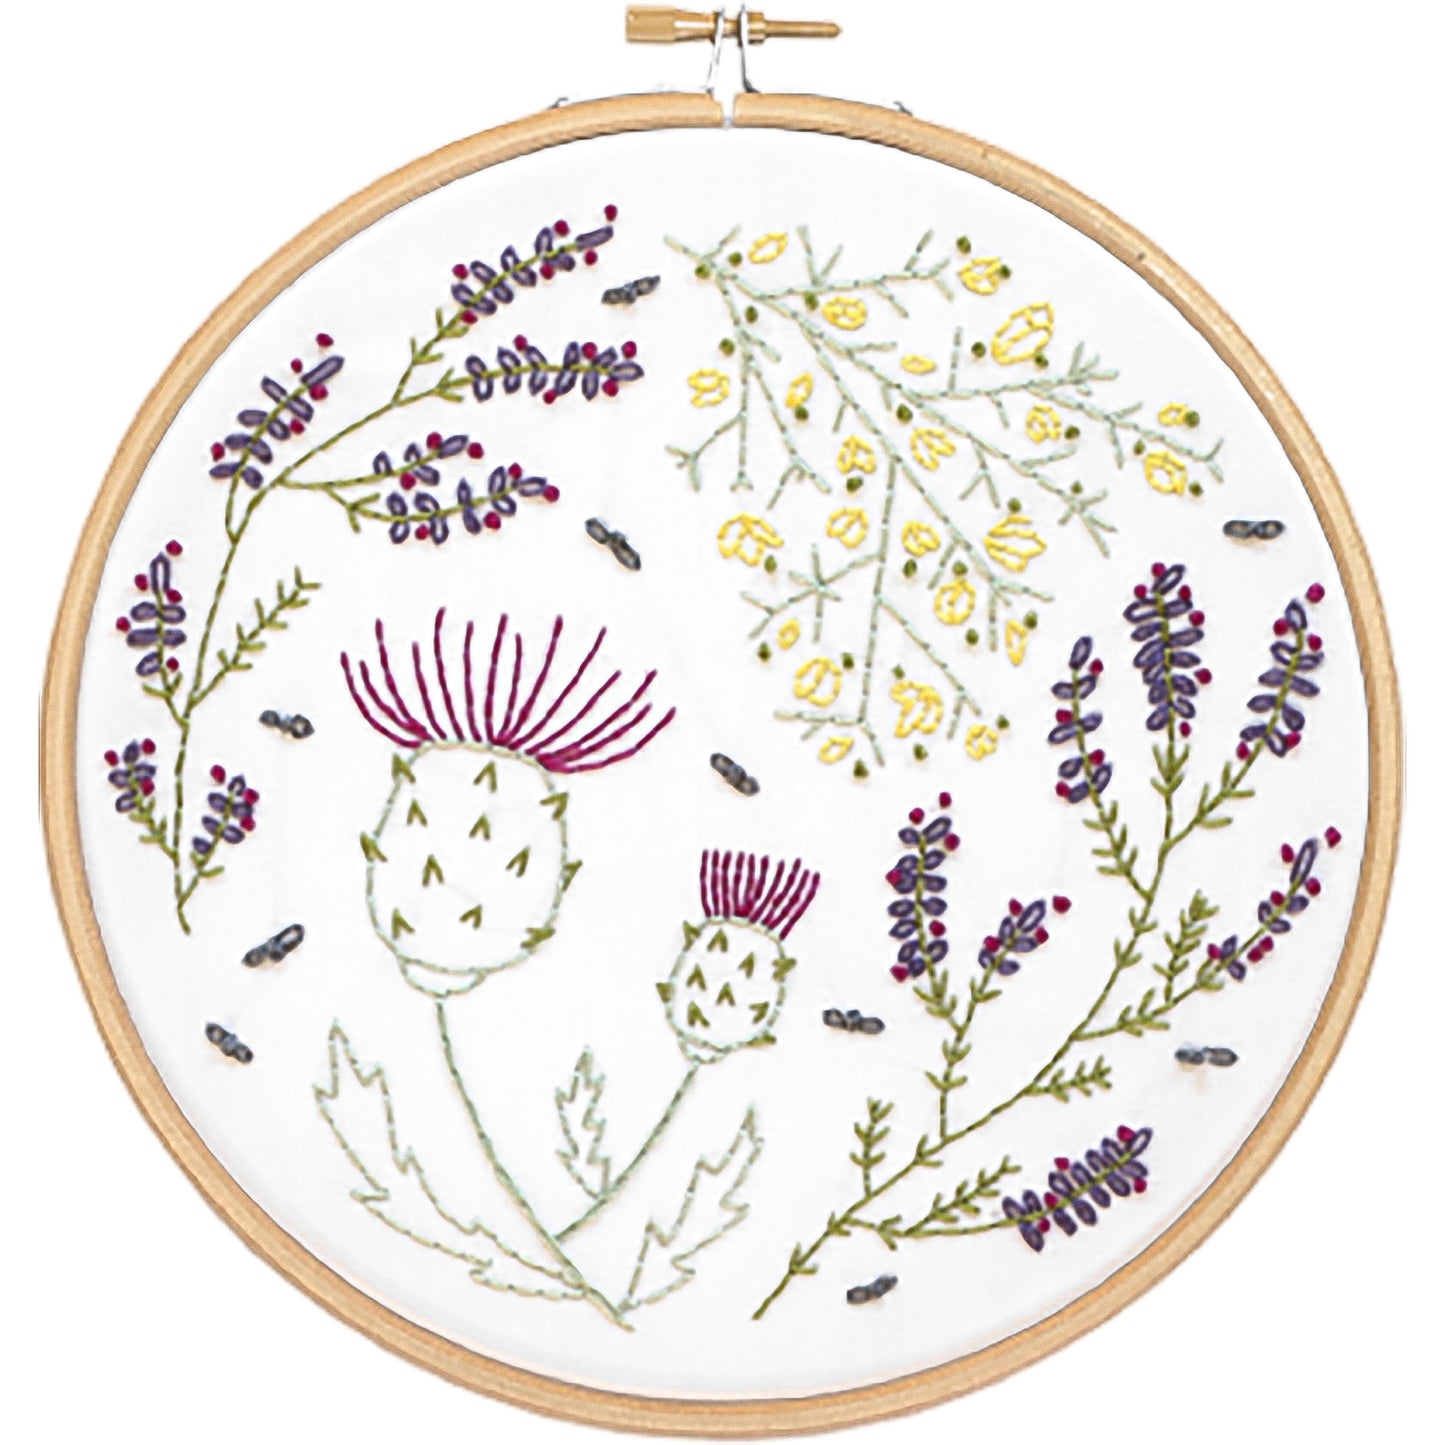 Highland Heathers Embroidery Kit Alternative View #1